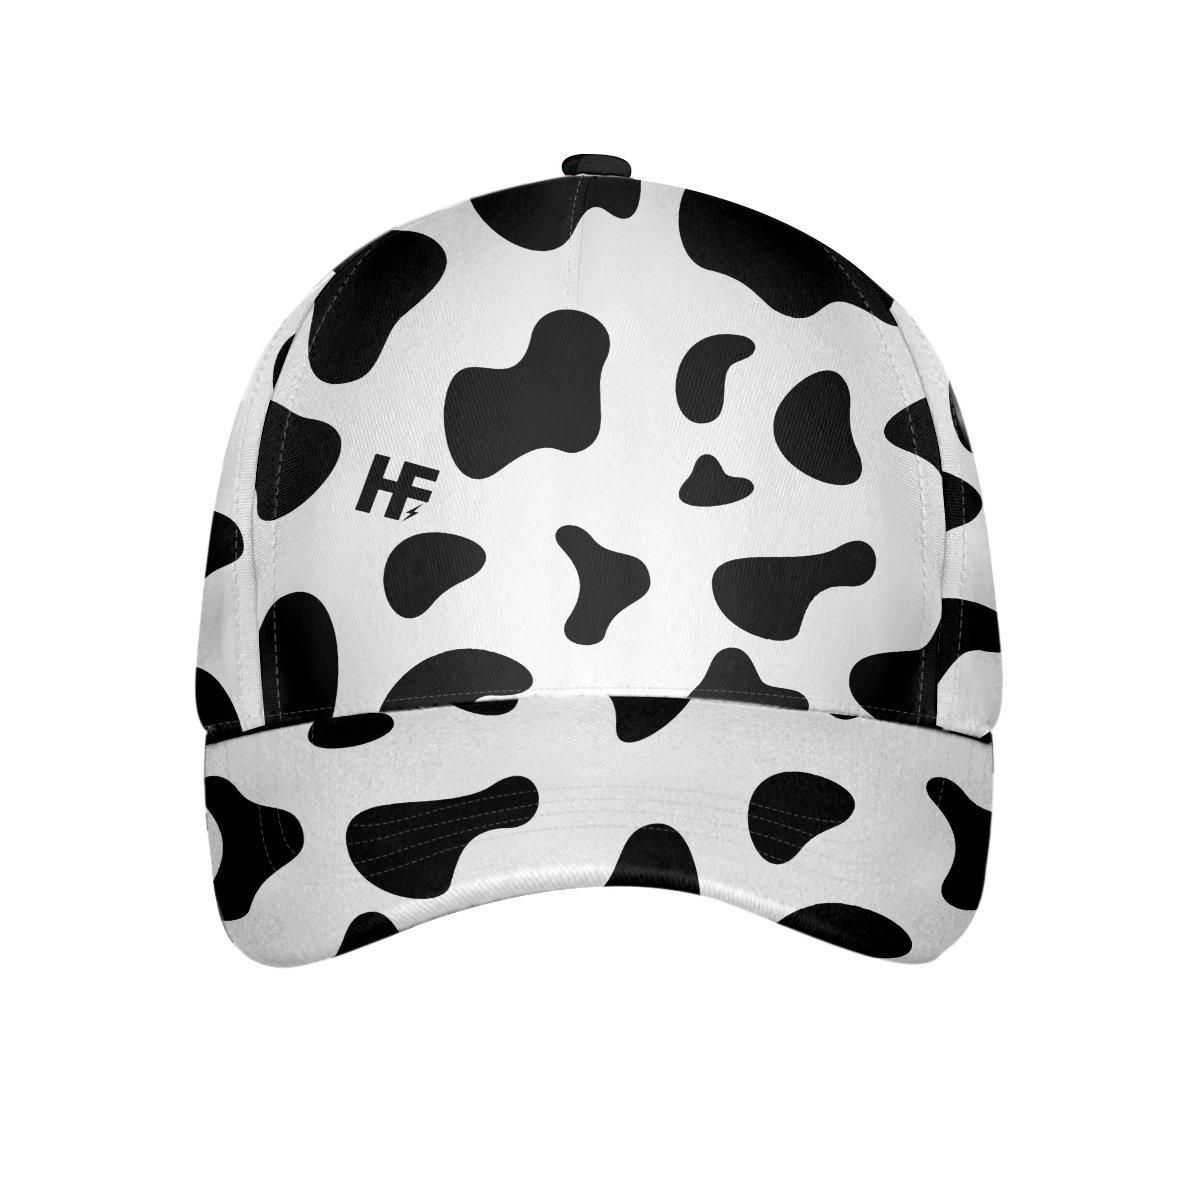 Cow Skin Seamless Pattern Classic Cap